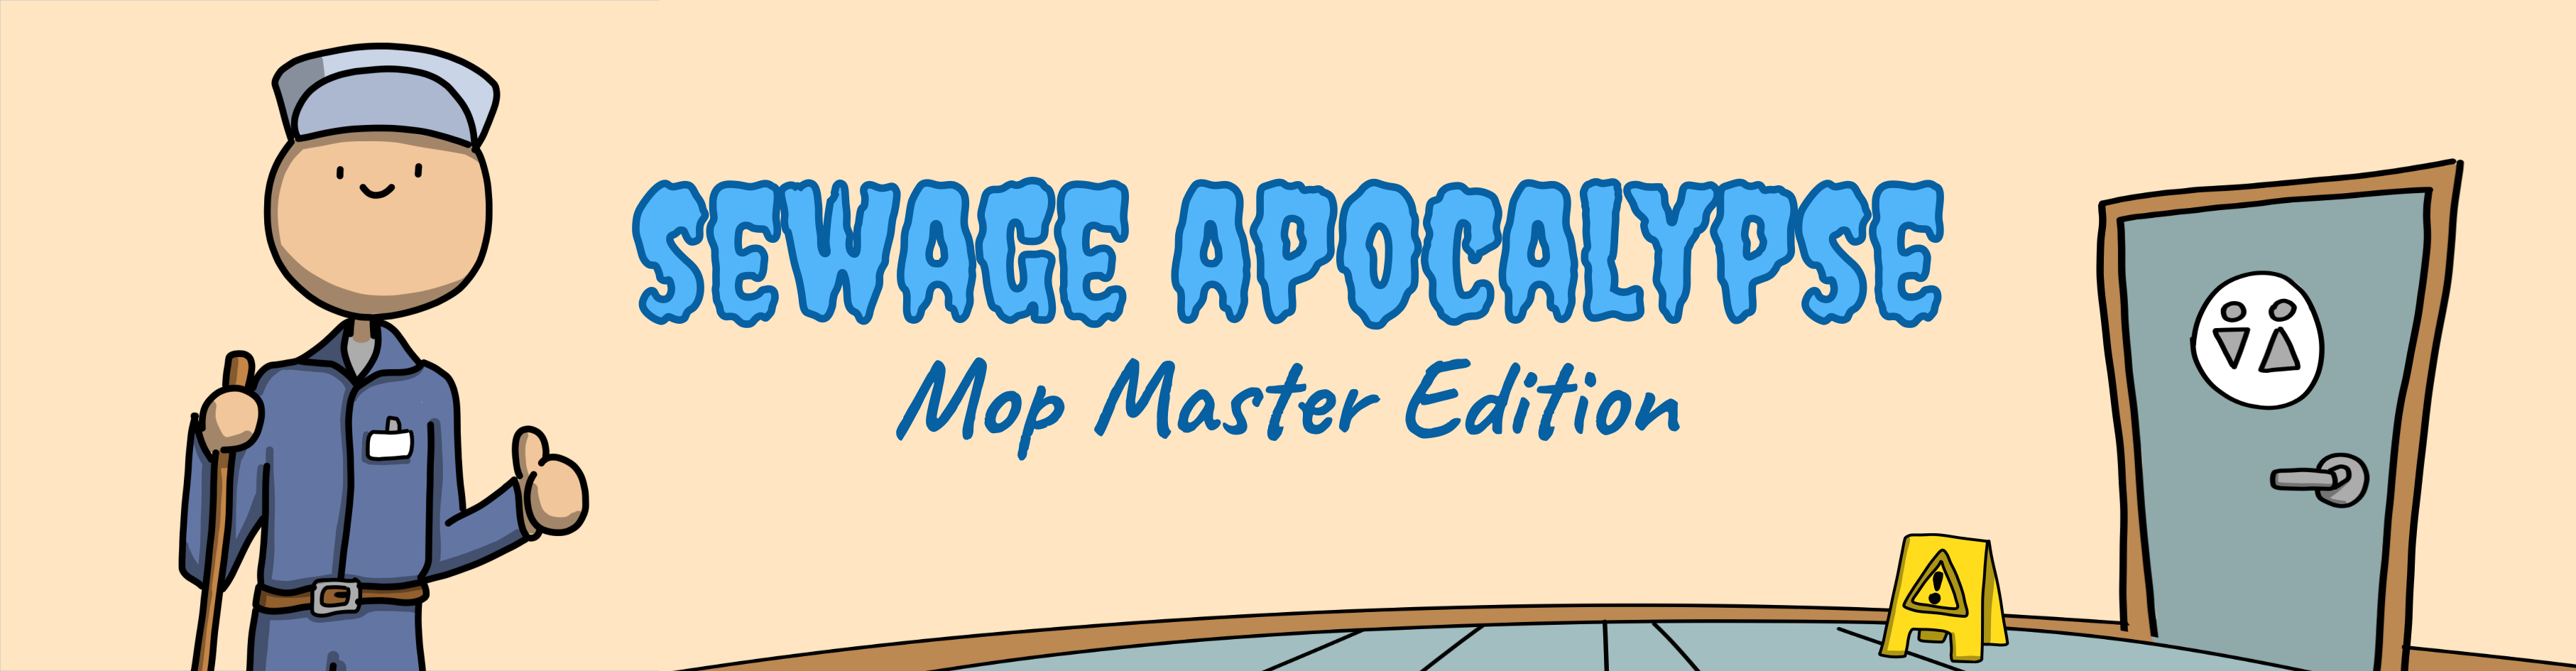 Sewage Apocalypse - Mop Master Edition